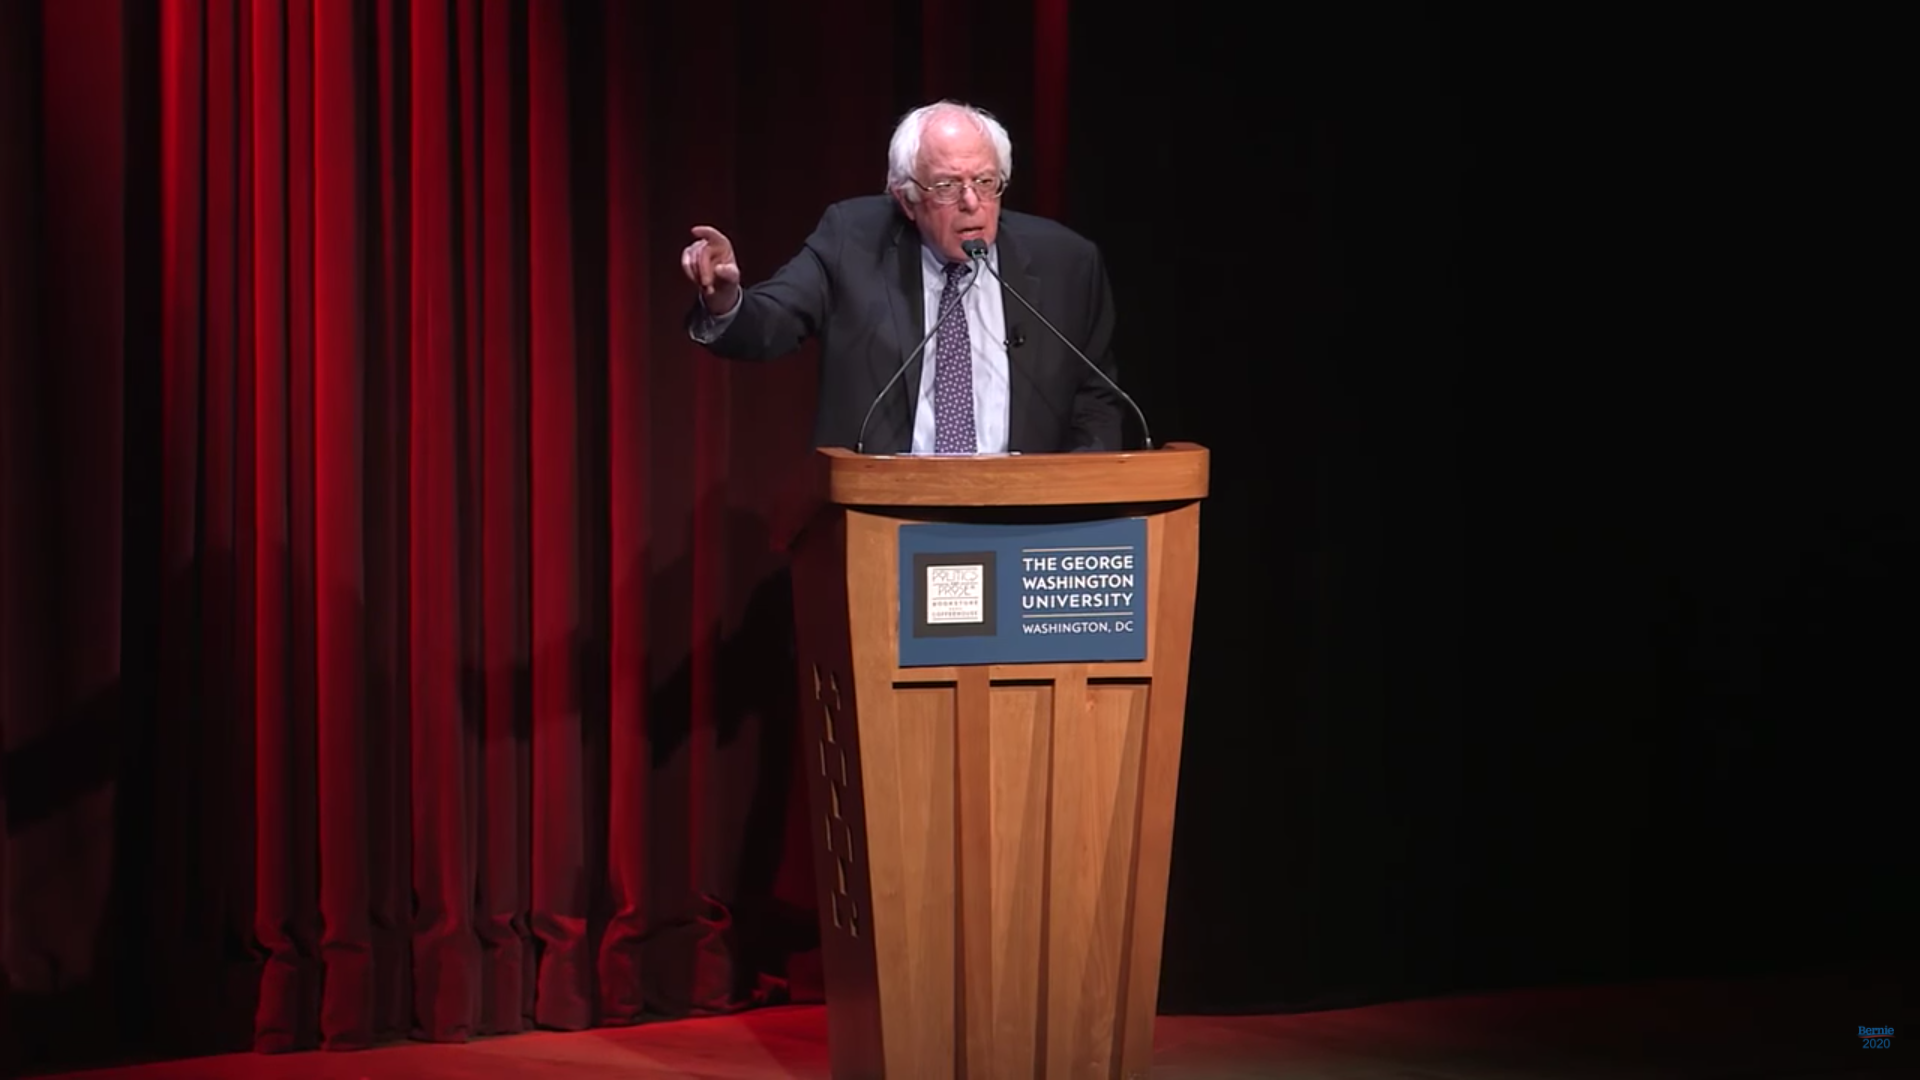 Bernie Sanders at George Washington University. Photo by: Bernie Sanders 2020 As An Independent / YouTube